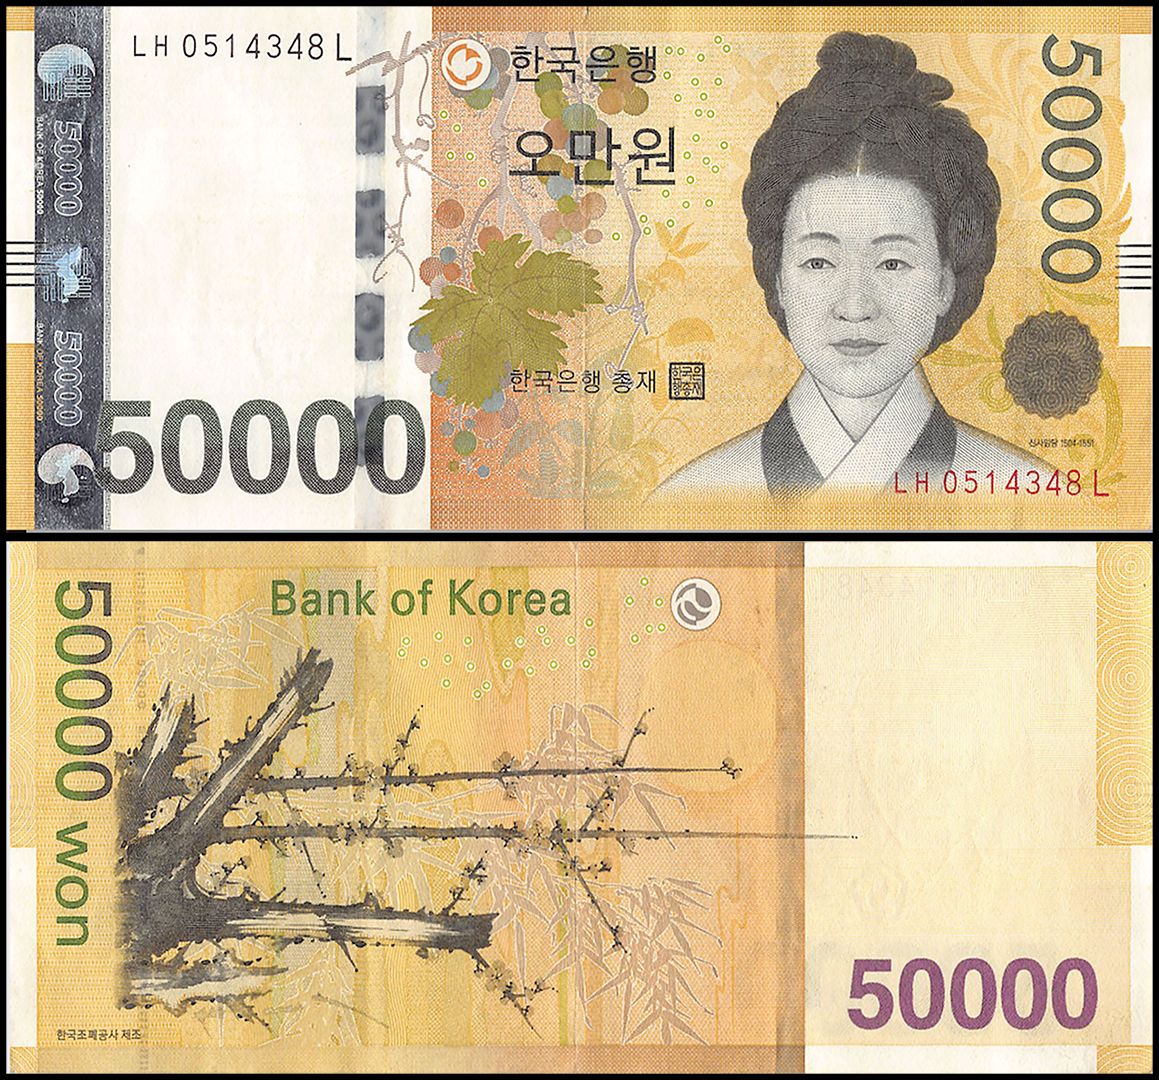 South Korea 50,000 Won Banknote, 2009, P-57, USED